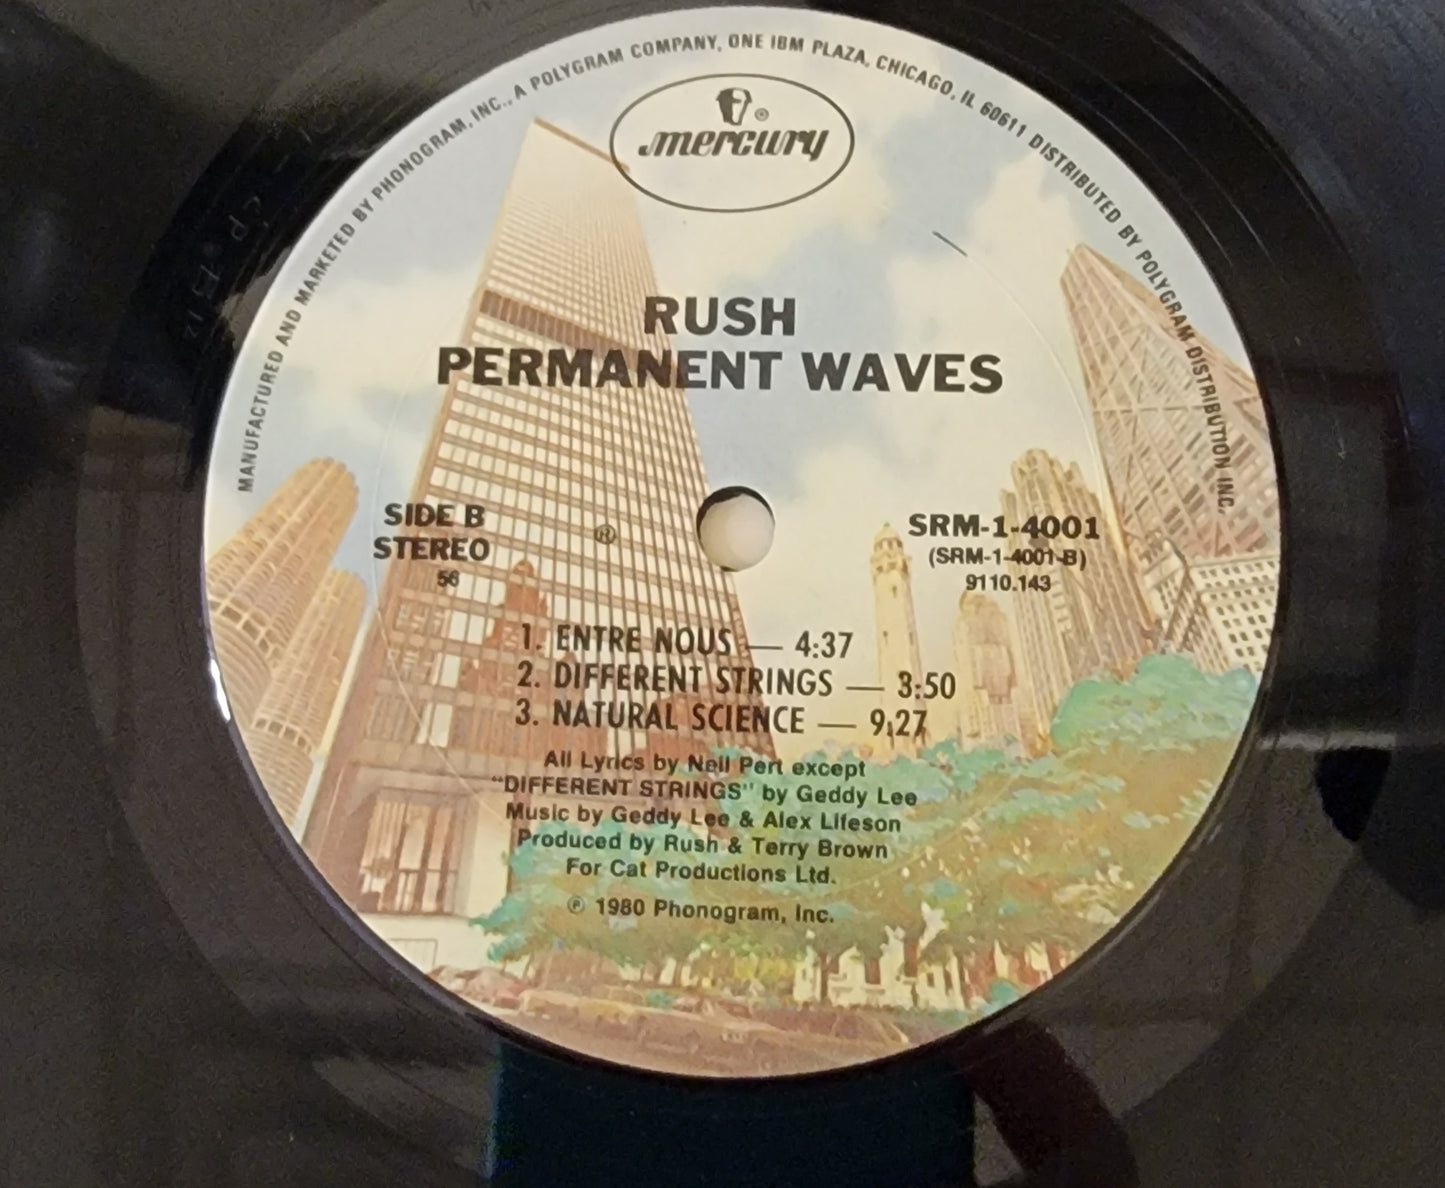 Rush "Permanent Waves" 1980 Hard Rock Record Album